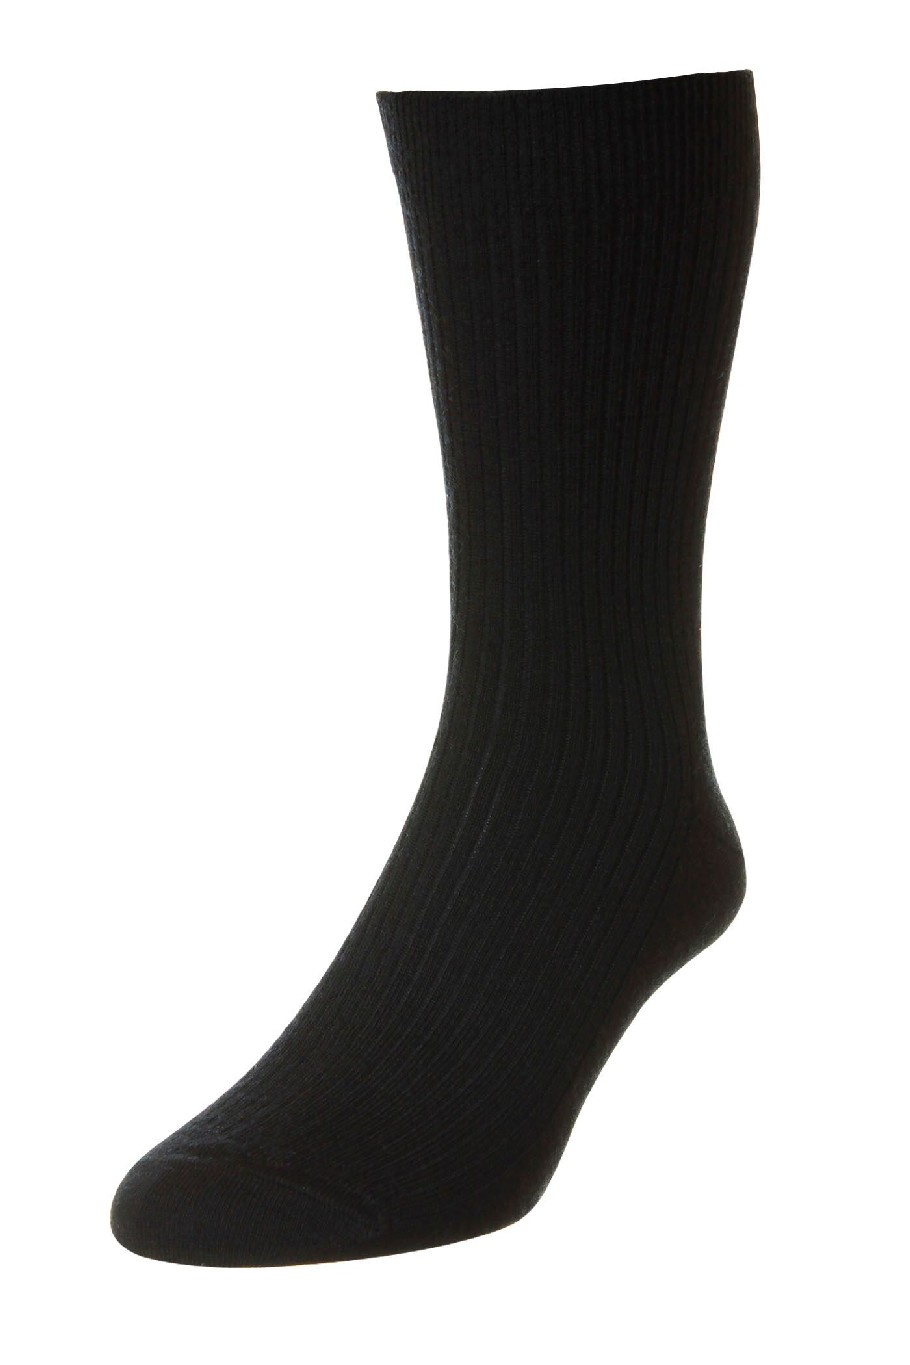 HJ Socks HJ70 Black size 11-13